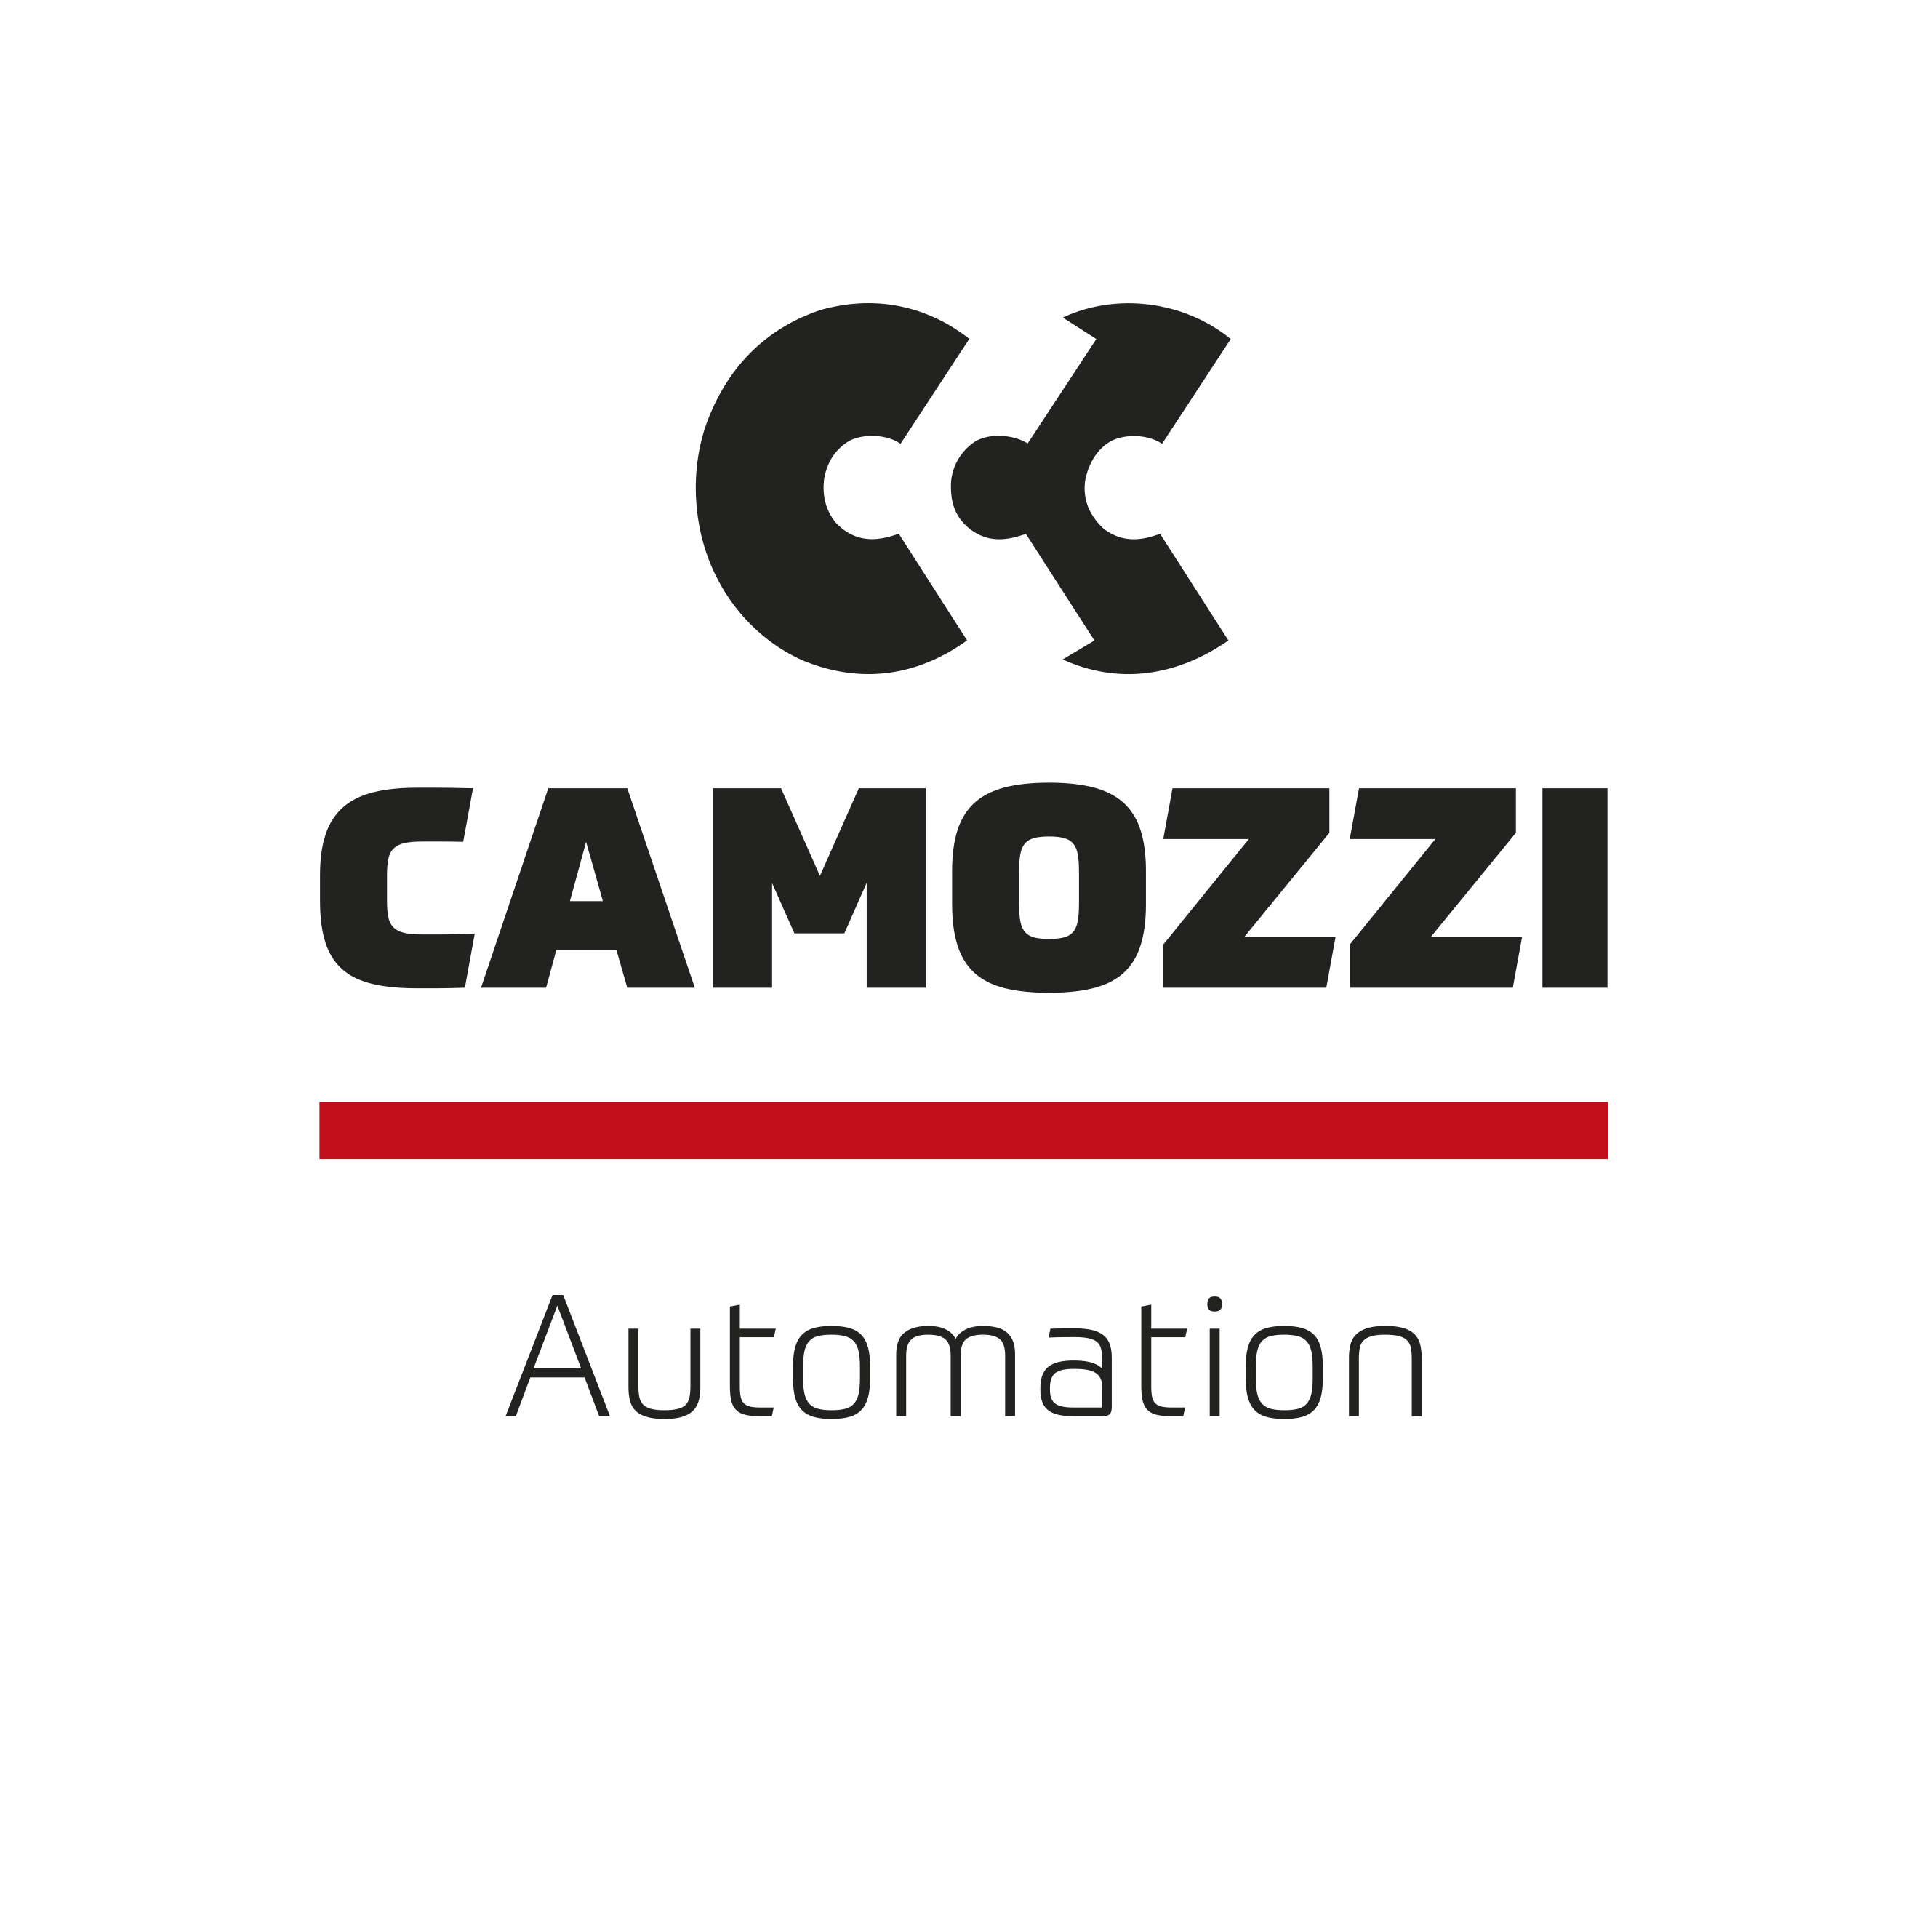 Camozzi Automation Ltd